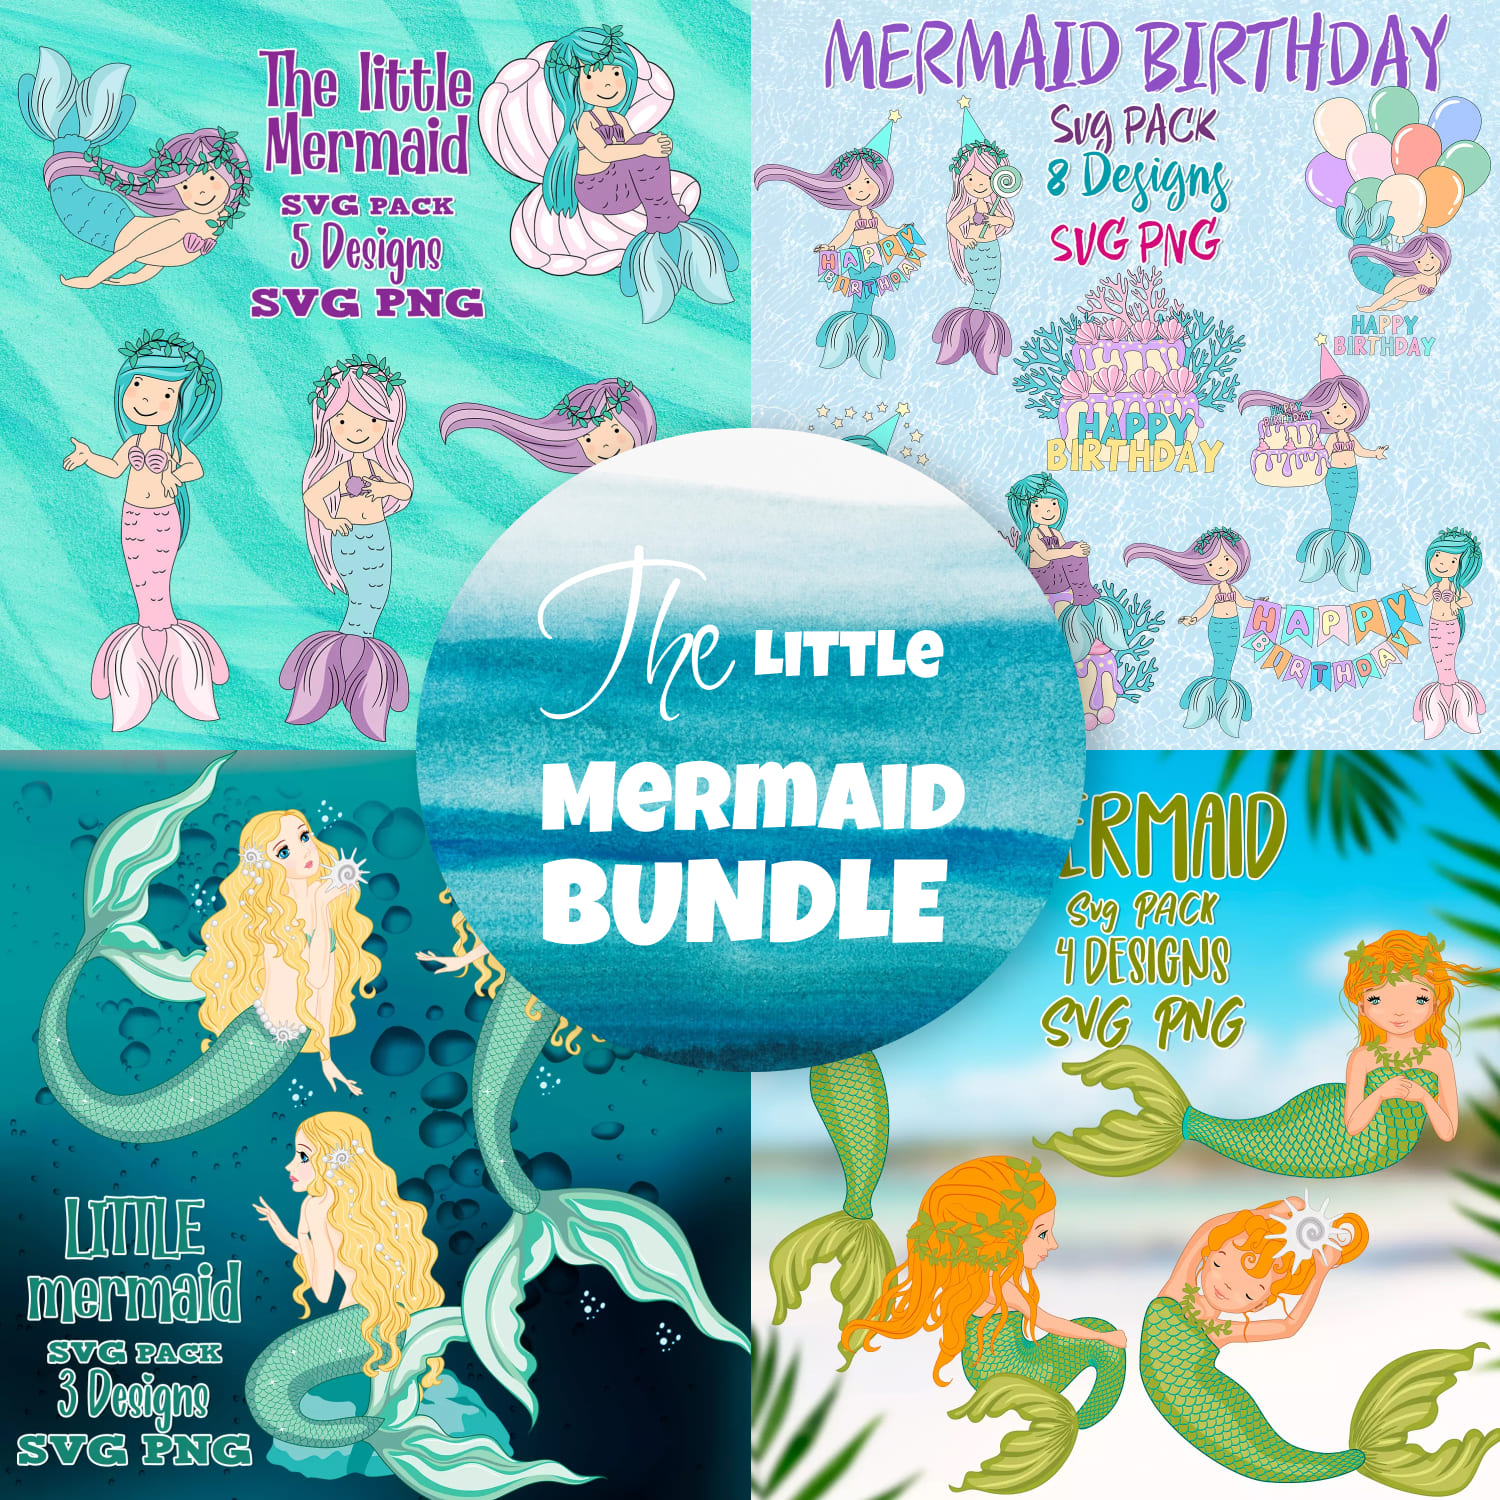 The Little Mermaid SVG Bundle.